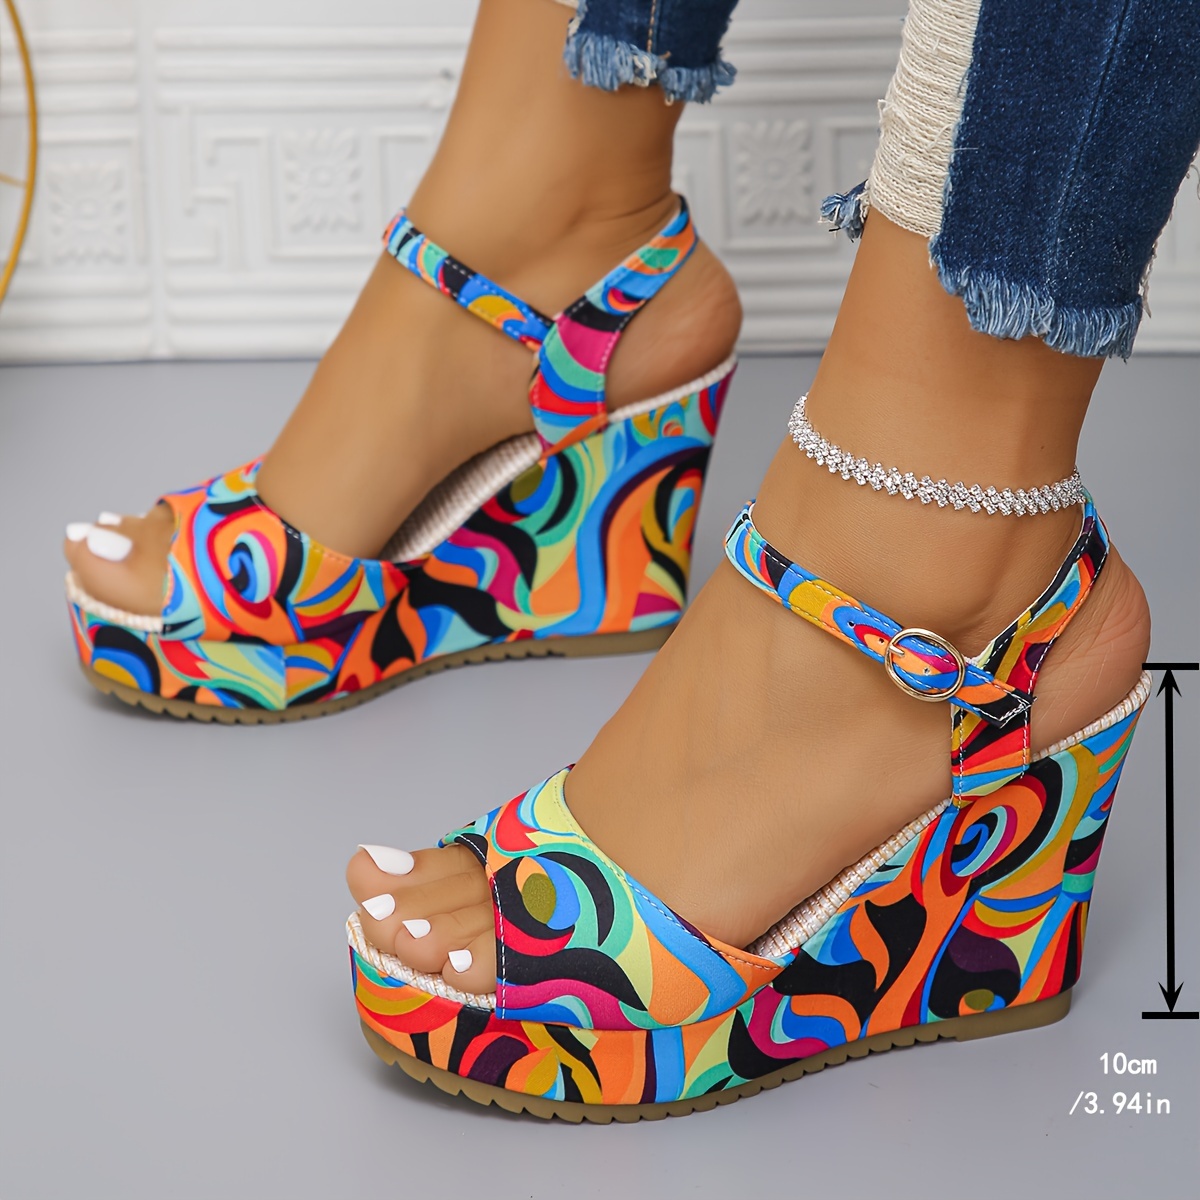 

Women's Contrast Color Wedge Sandals, Trendy Colorful Platform High Heels, Fashion Summer Ankle Strap Sandals